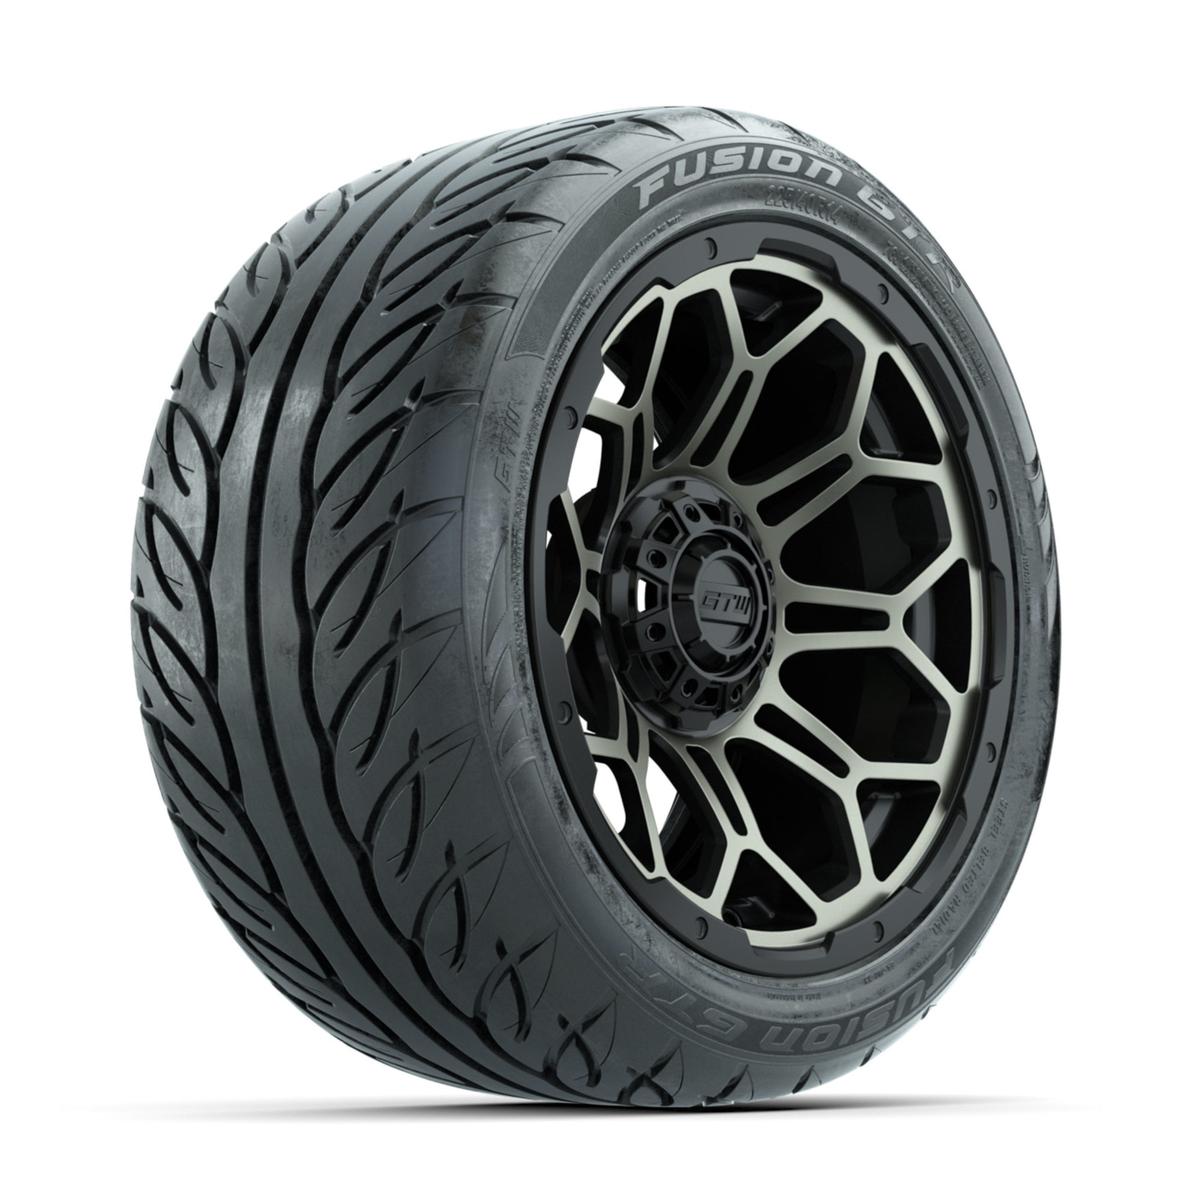 GTW Bravo Matte Bronze 14 in Wheels with 225/40-R14 Fusion GTR Street Tires – Full Set